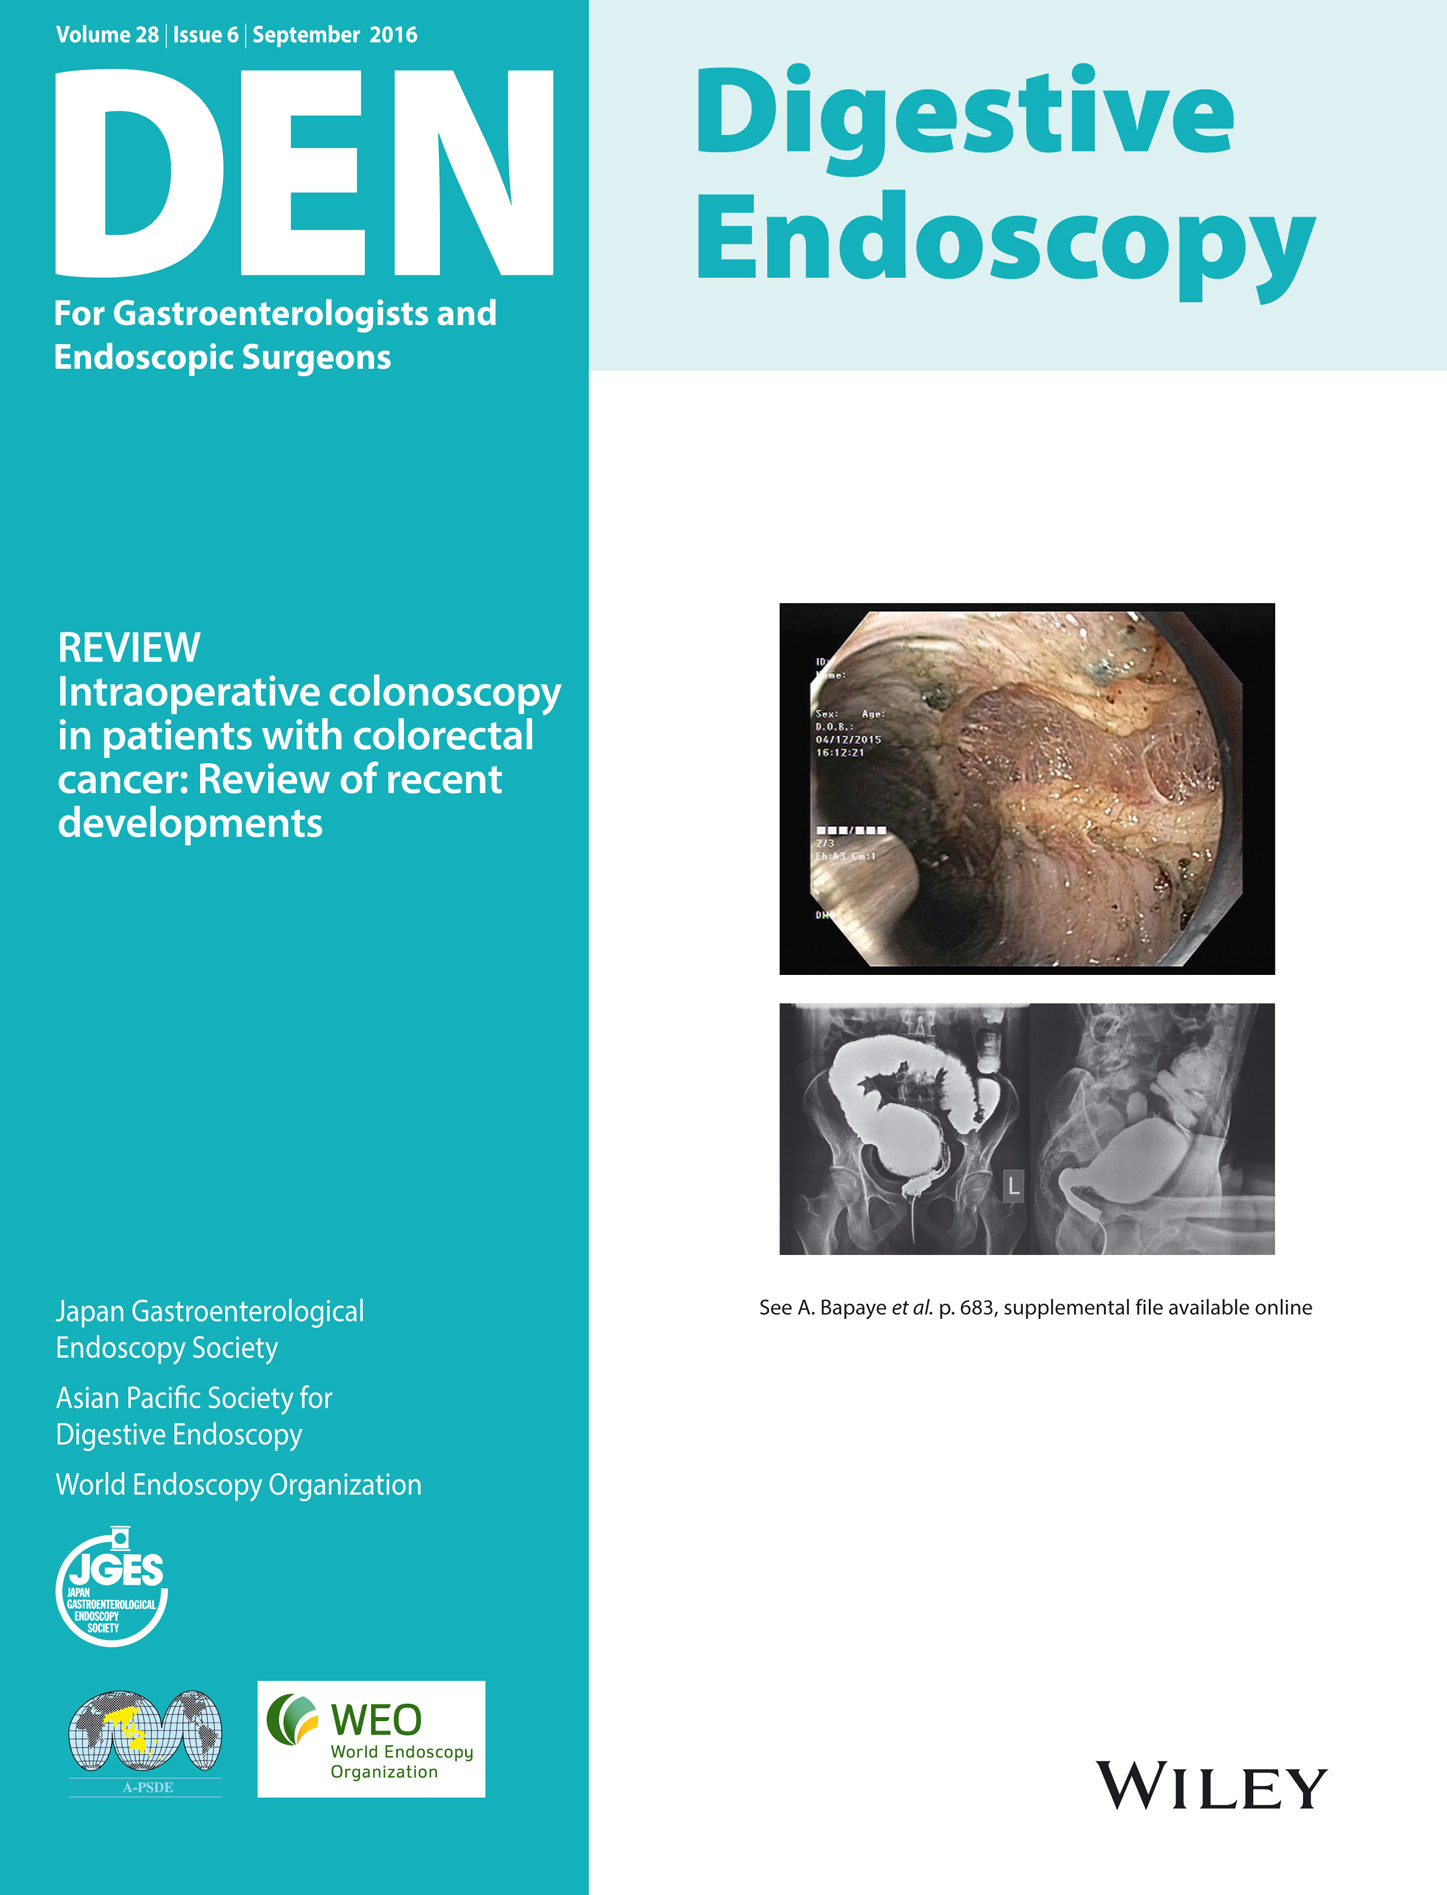 Digestive Endoscopy Vol28-6